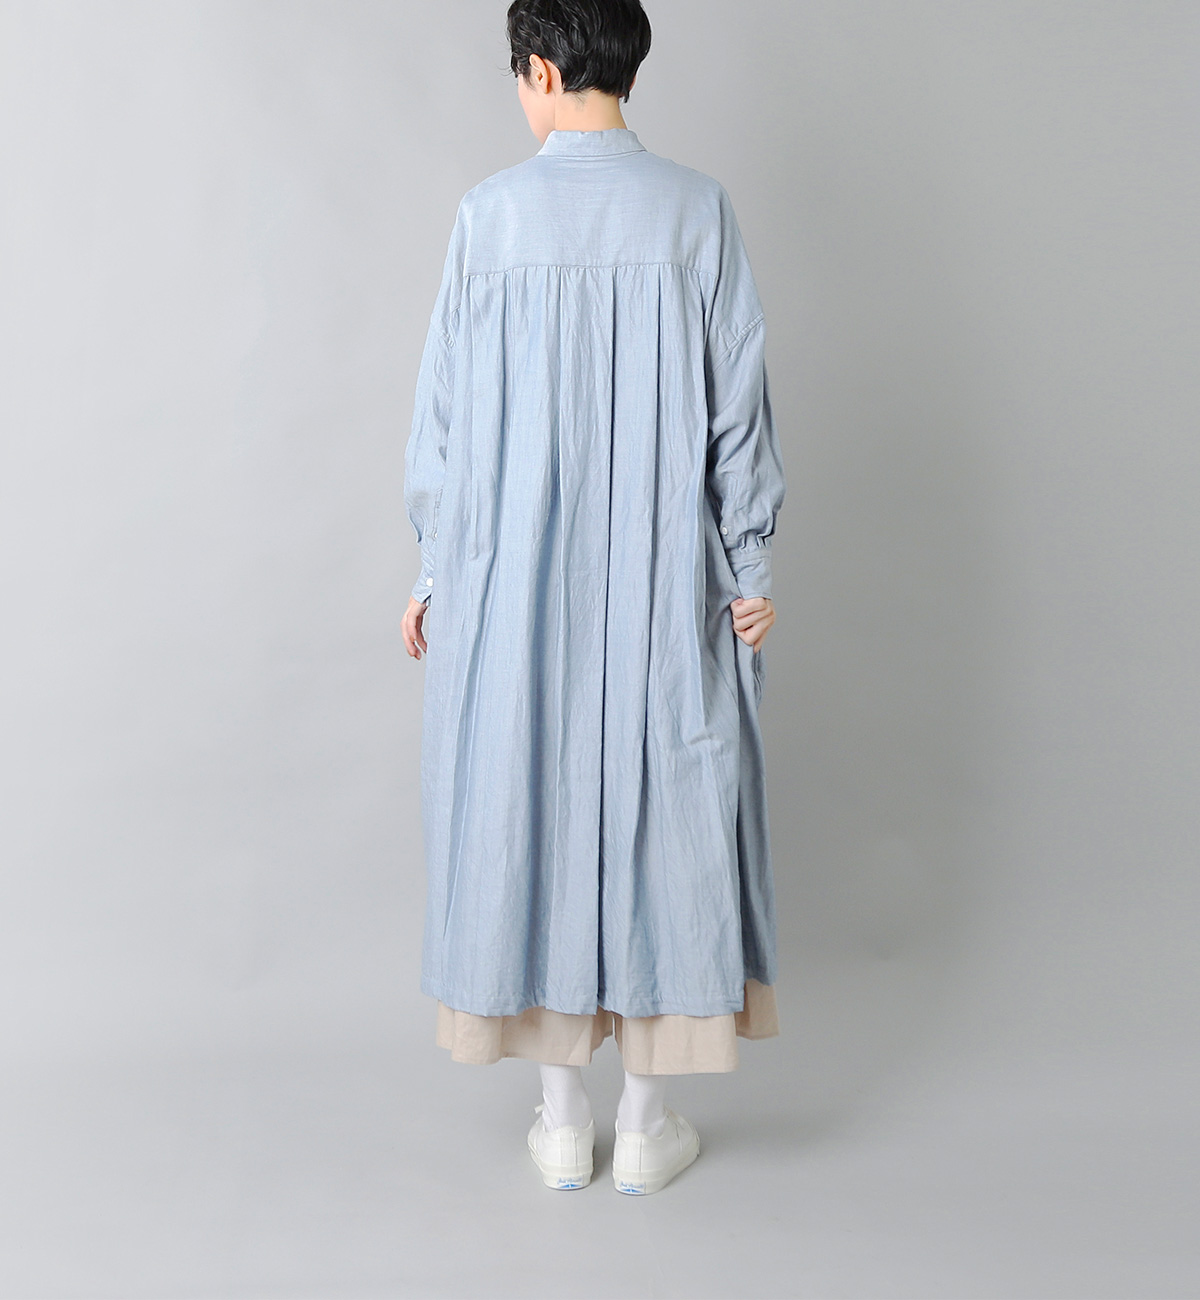 TOUJOURS(トゥジュー)カシミヤコットンバックワイドプリーツシャツドレス mm33kd04